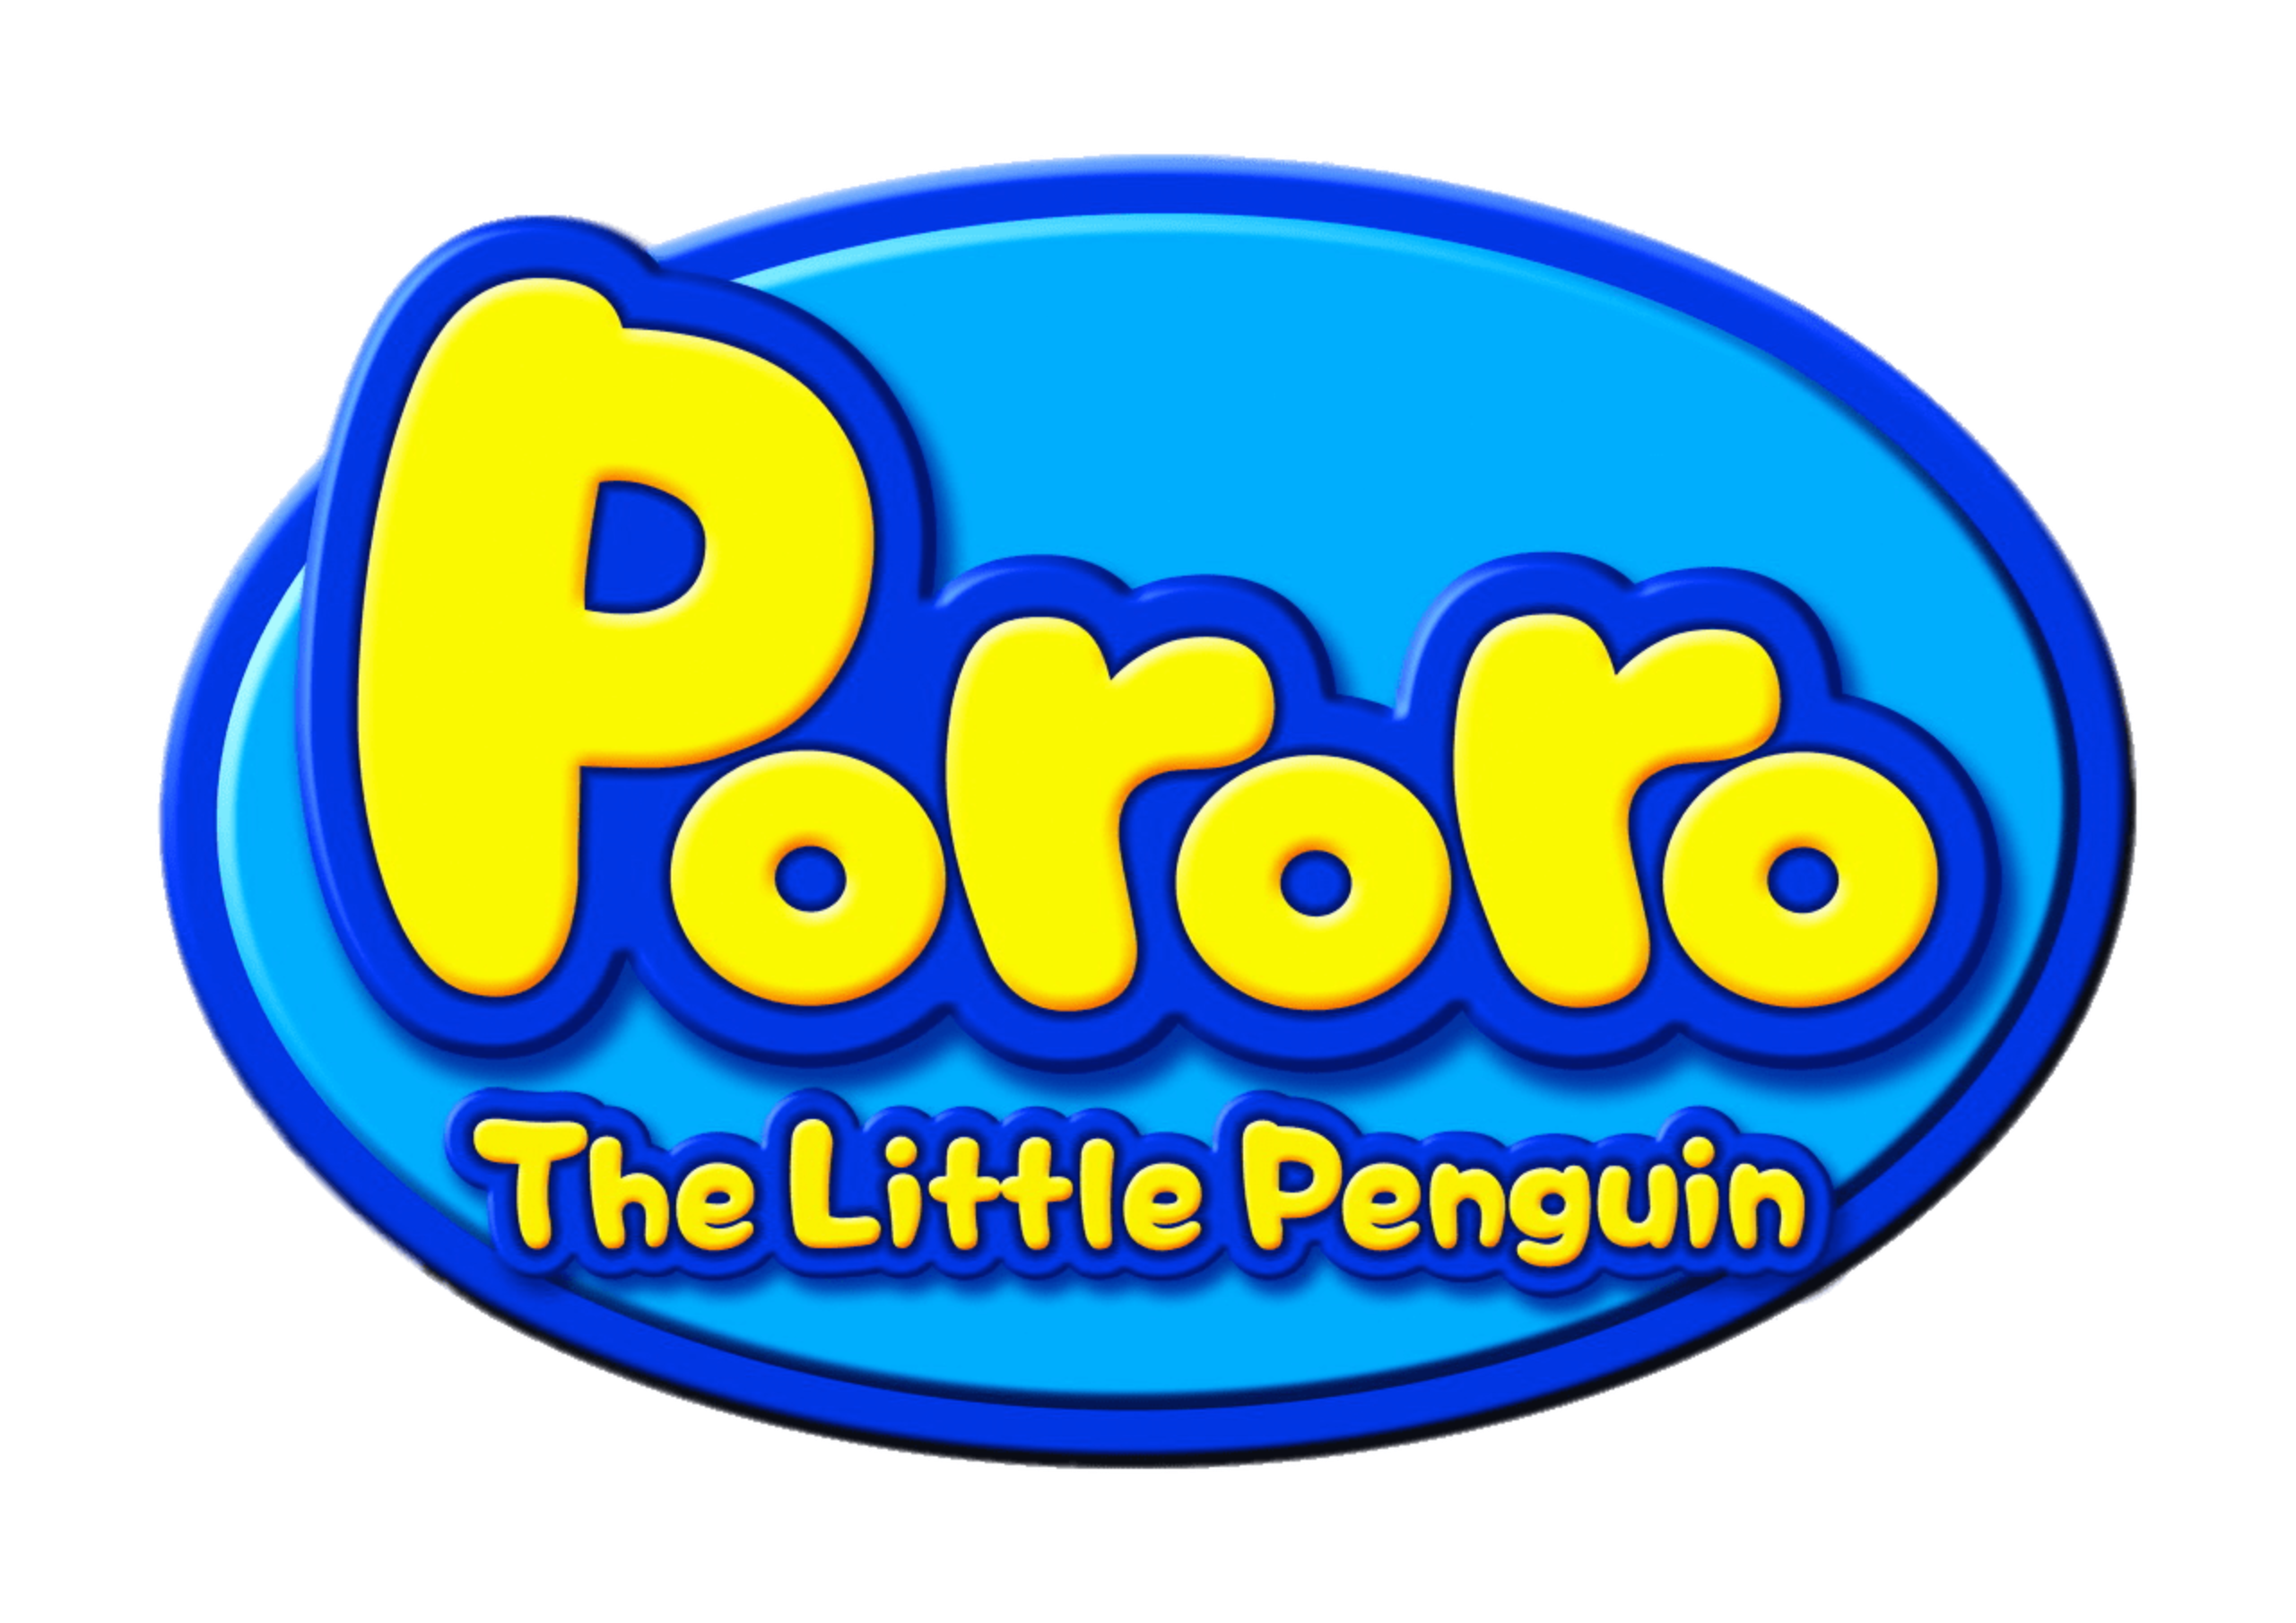 Pororo the Little Penguin Complete (5 DVDs Box Set)